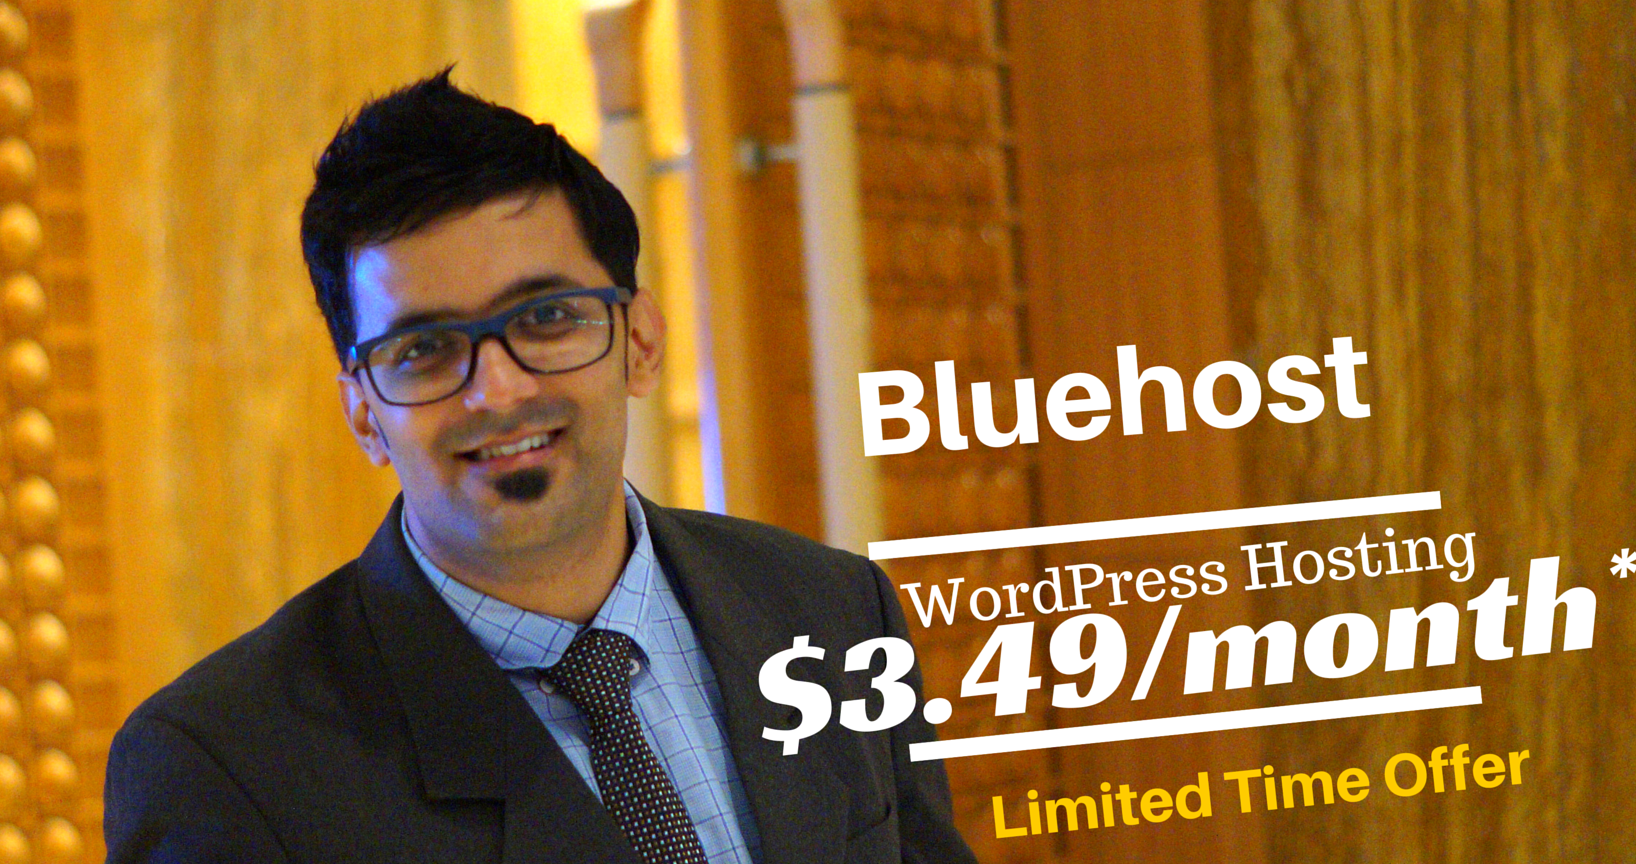 Bluehost Hosting - Build A Website